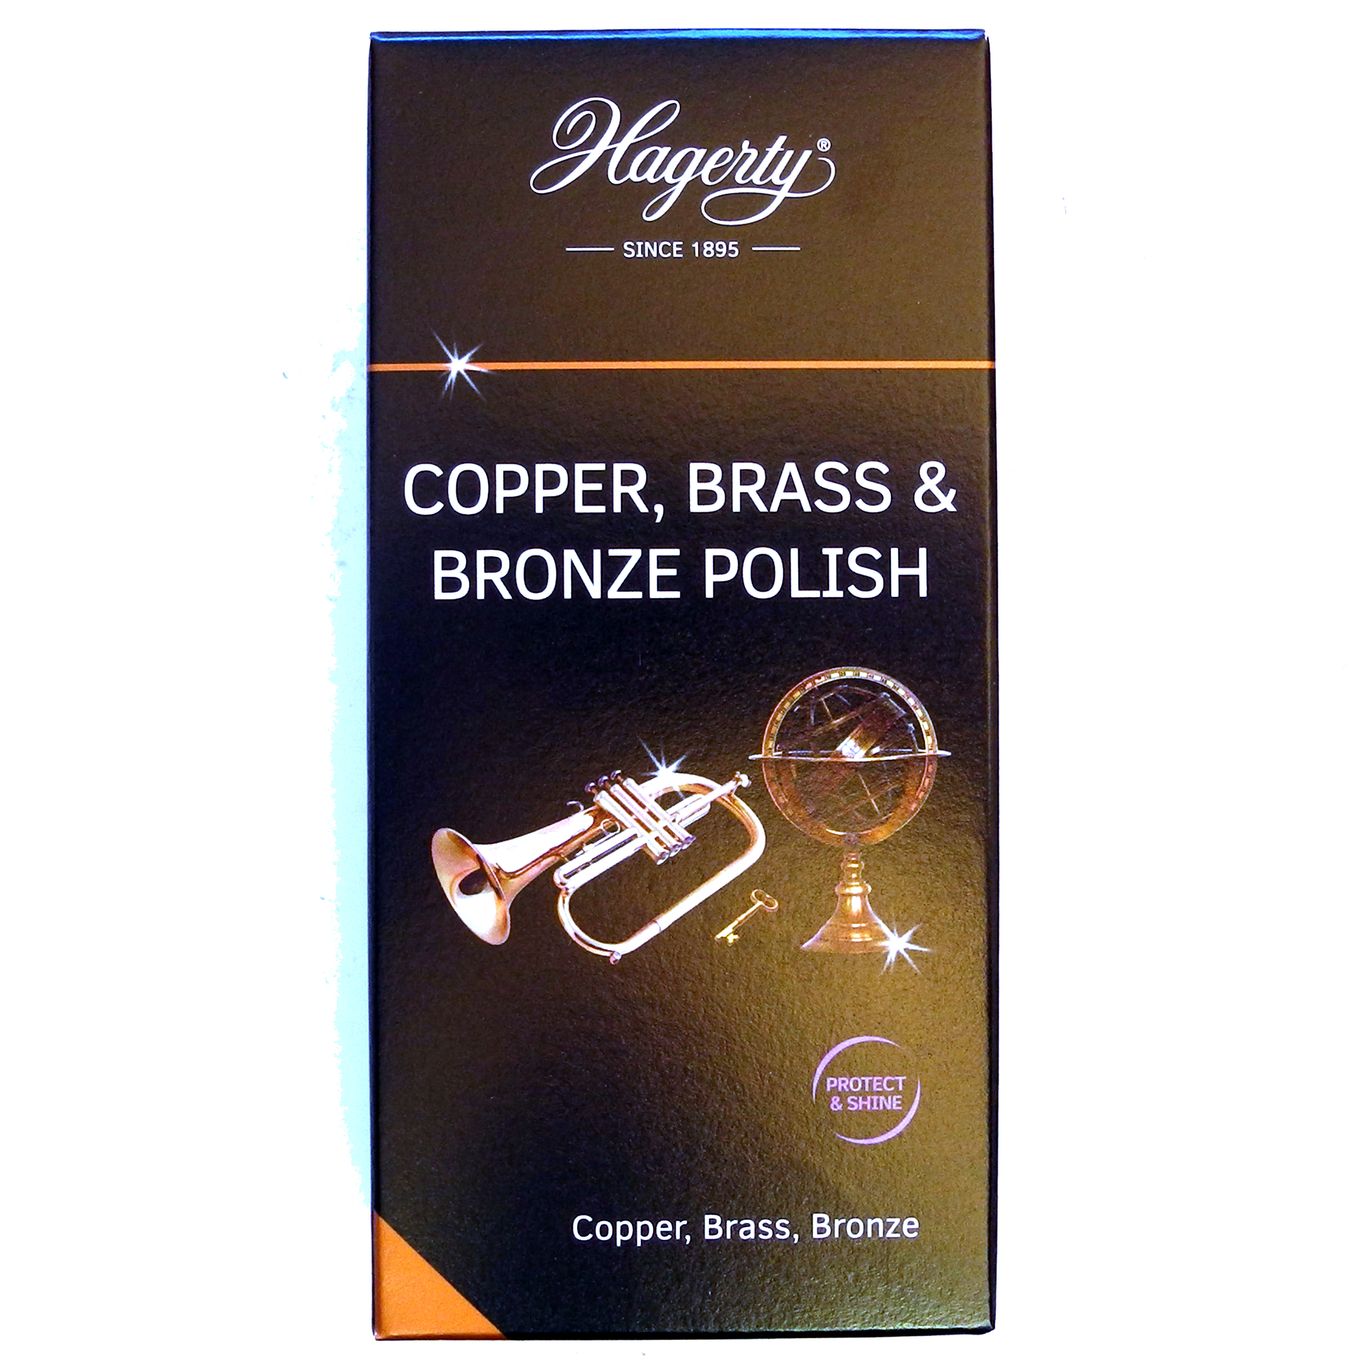 Brass & Copper Polish 500ml